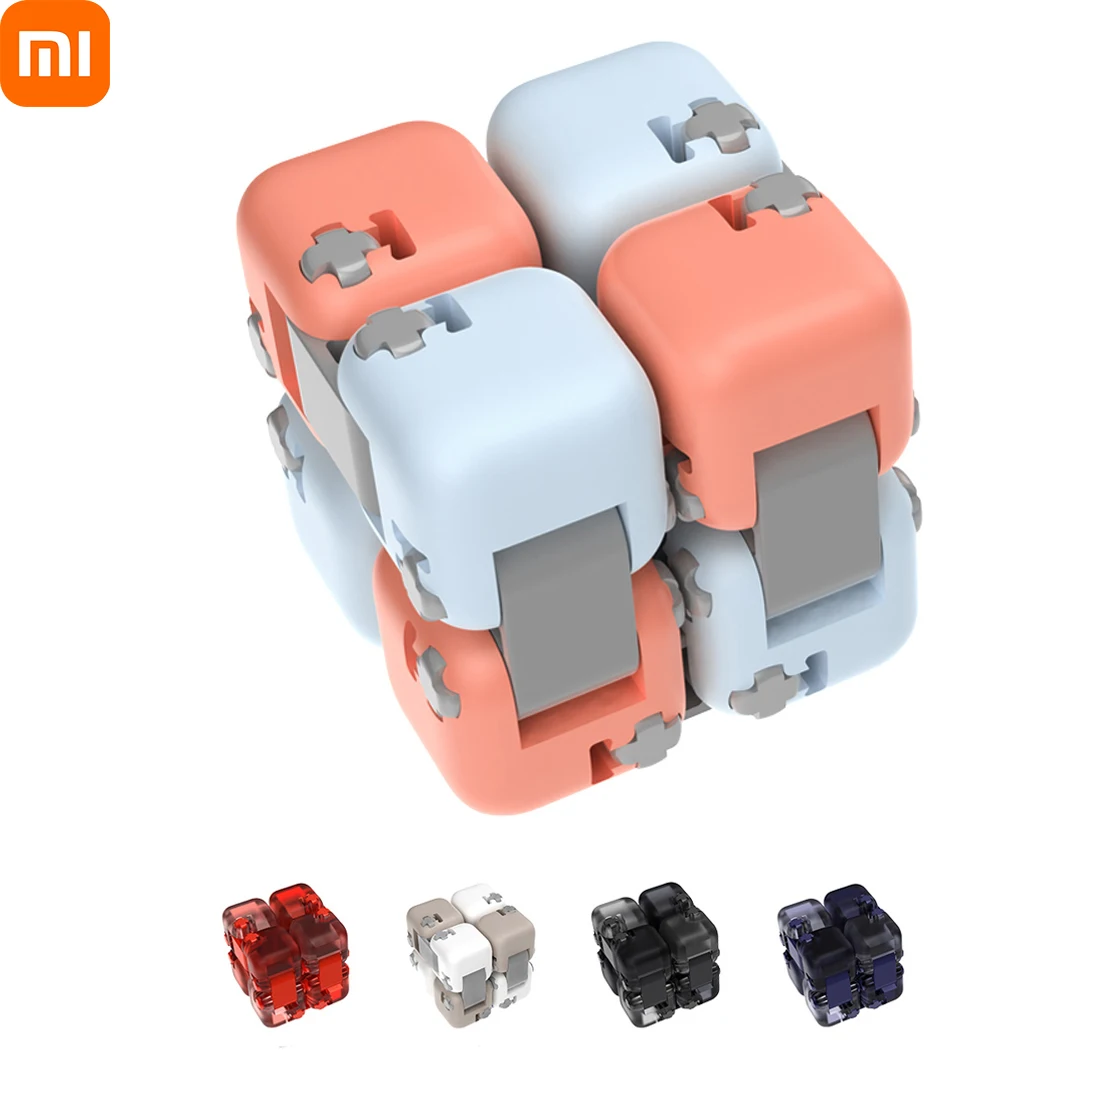 

Xiaomi Mitu Colorful Fidget Cube Spinner Seven Surprise Fingertip Building Block Bricks Toy Puzzle Assembling New Blind Toy Box